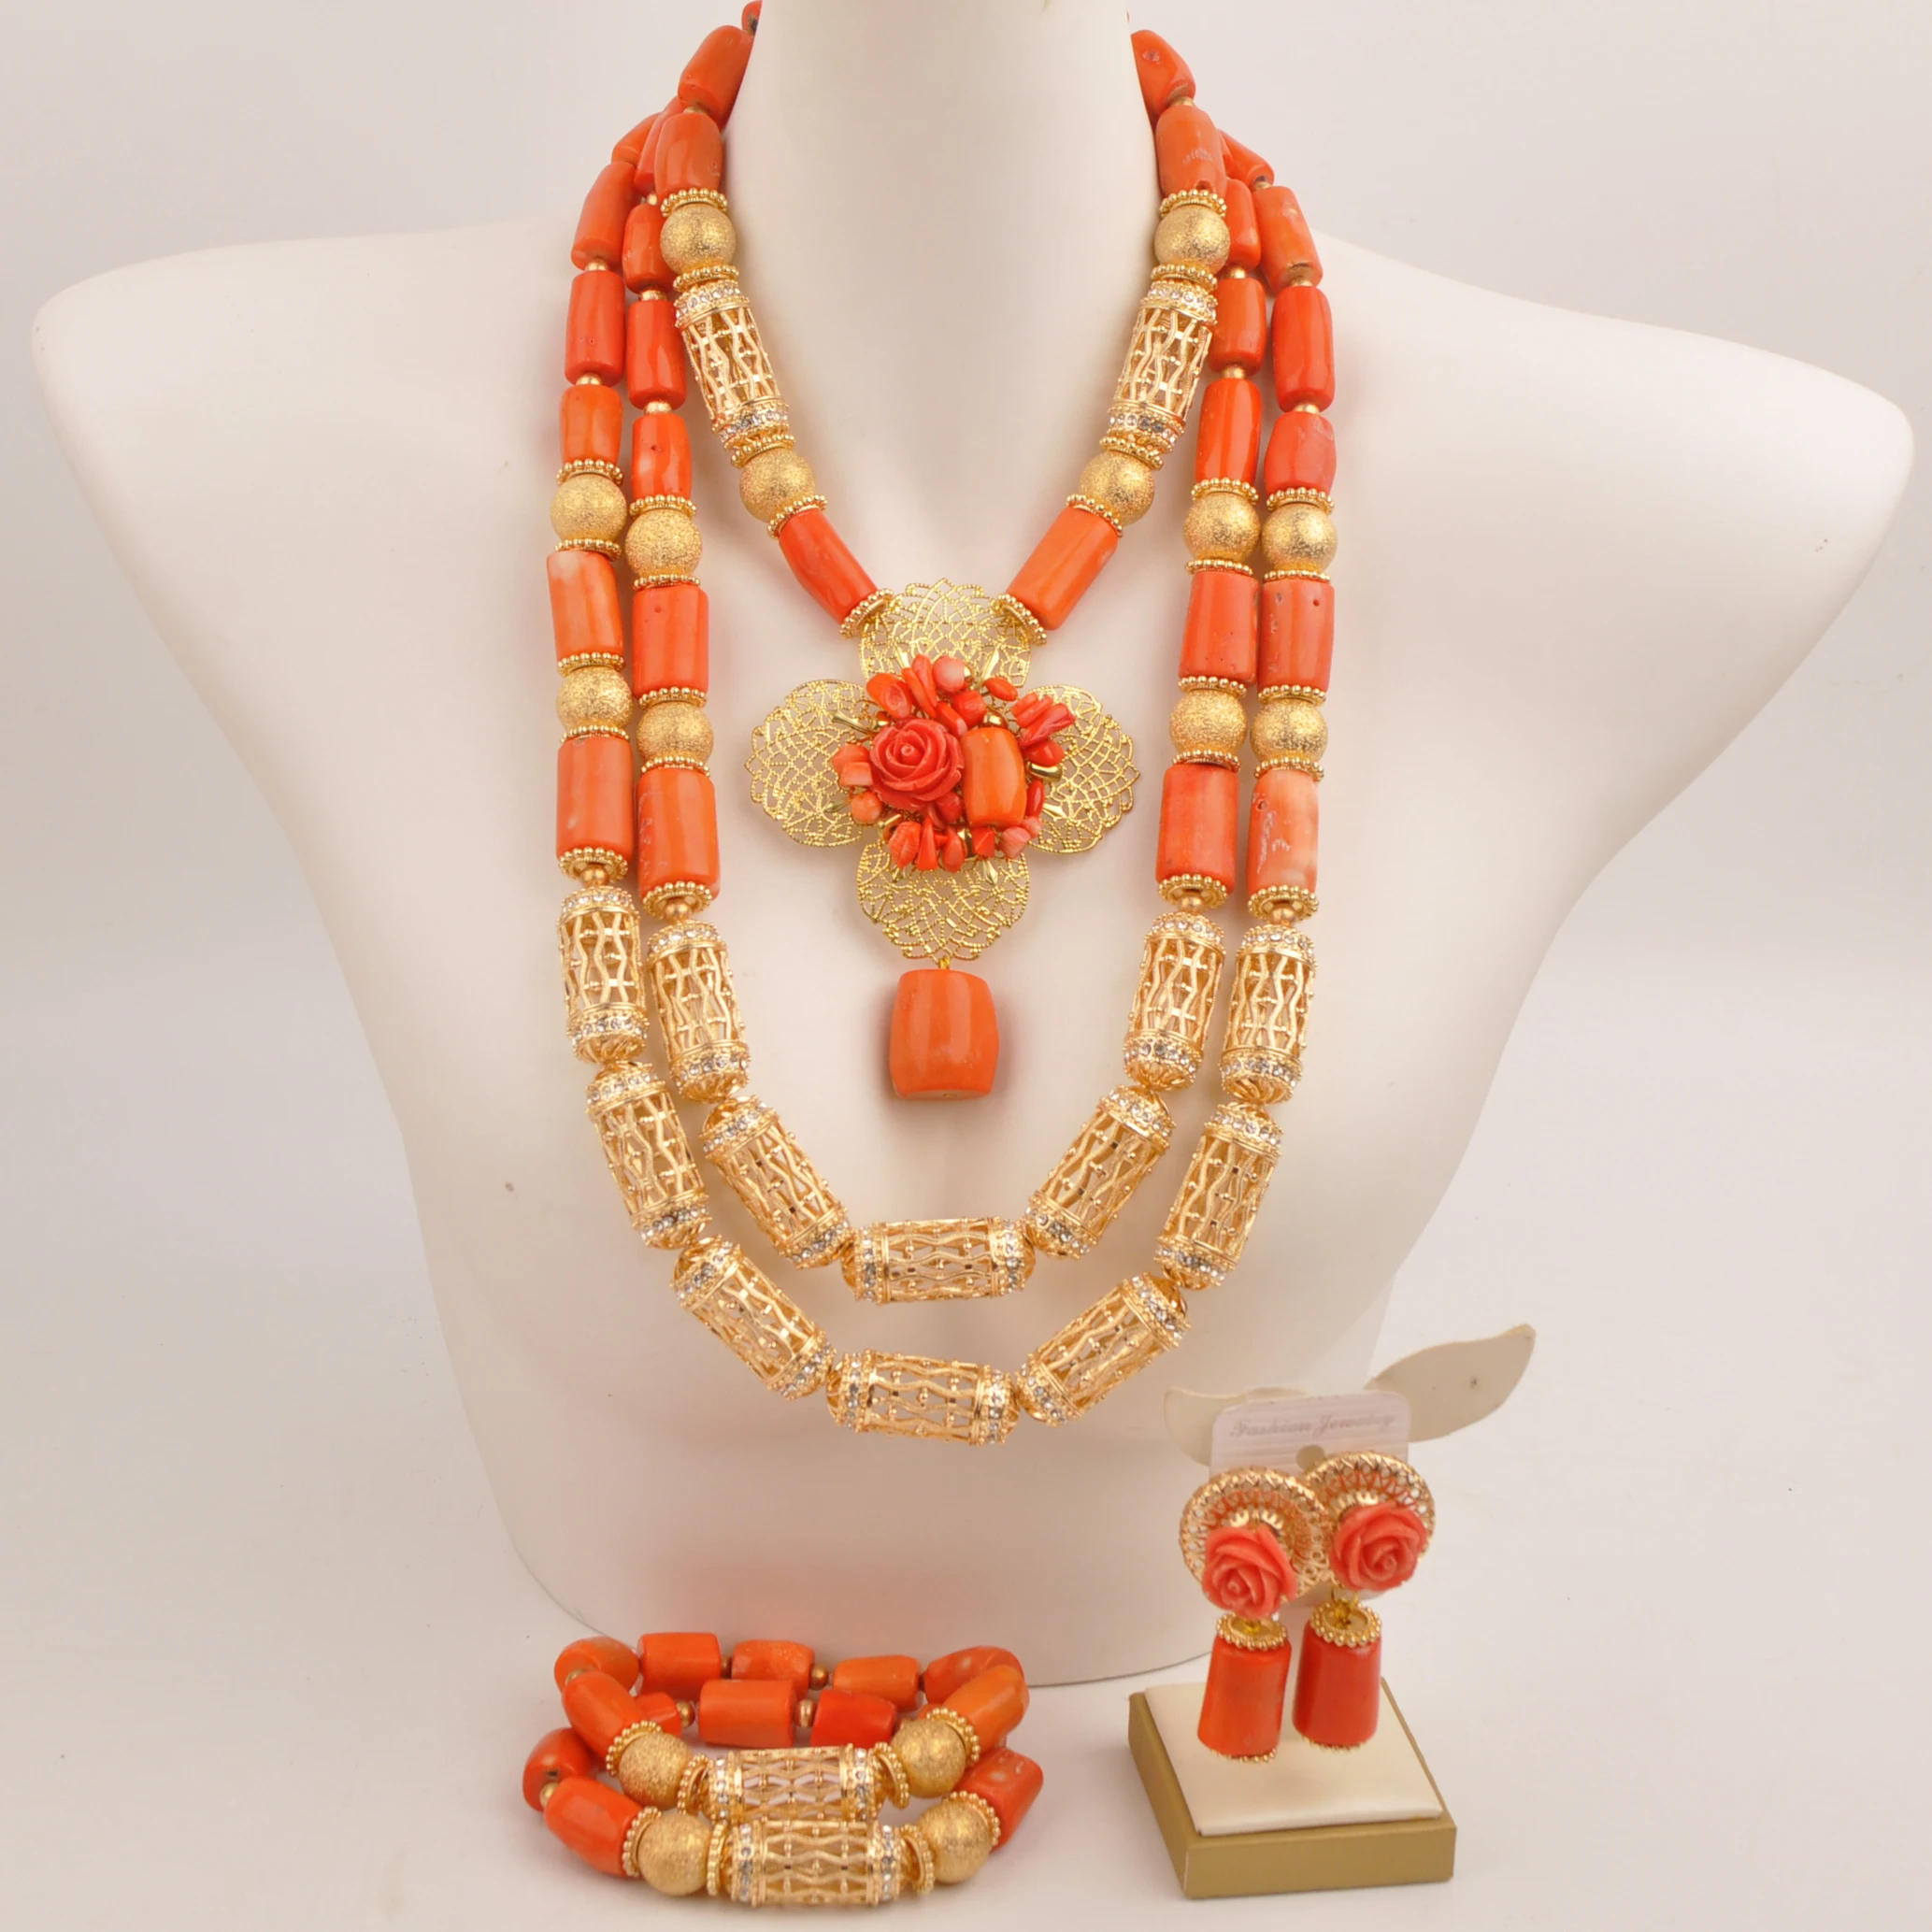 

Wedding Orange Jewelry Natural Coral Necklace Africa Nigeria Wedding jewelry set luxury